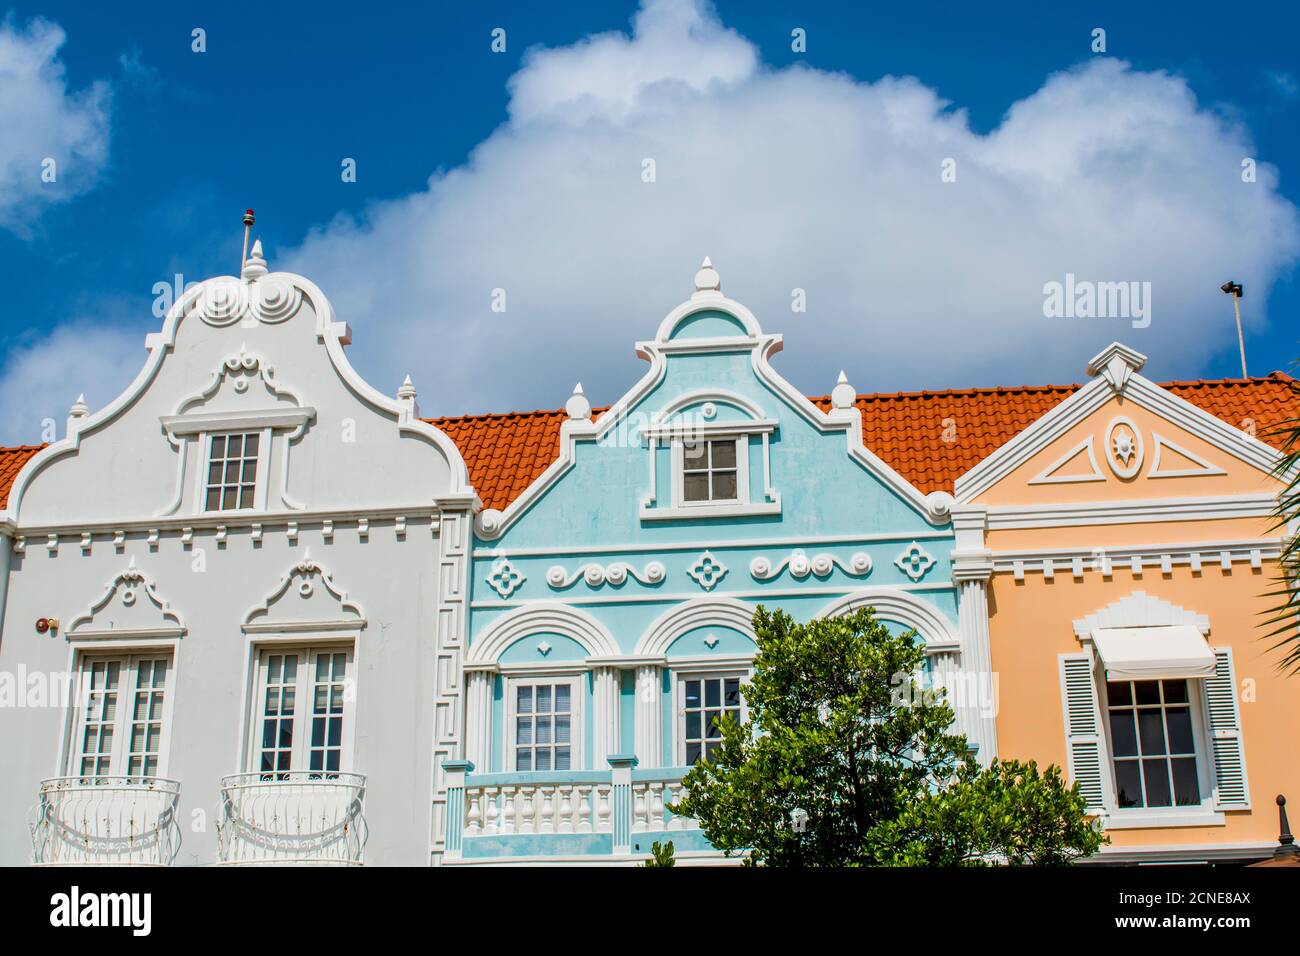 Architecture, detail of buildings, Oranjestad, Aruba, ABC Islands, Dutch Antilles, Caribbean, Central America Stock Photo